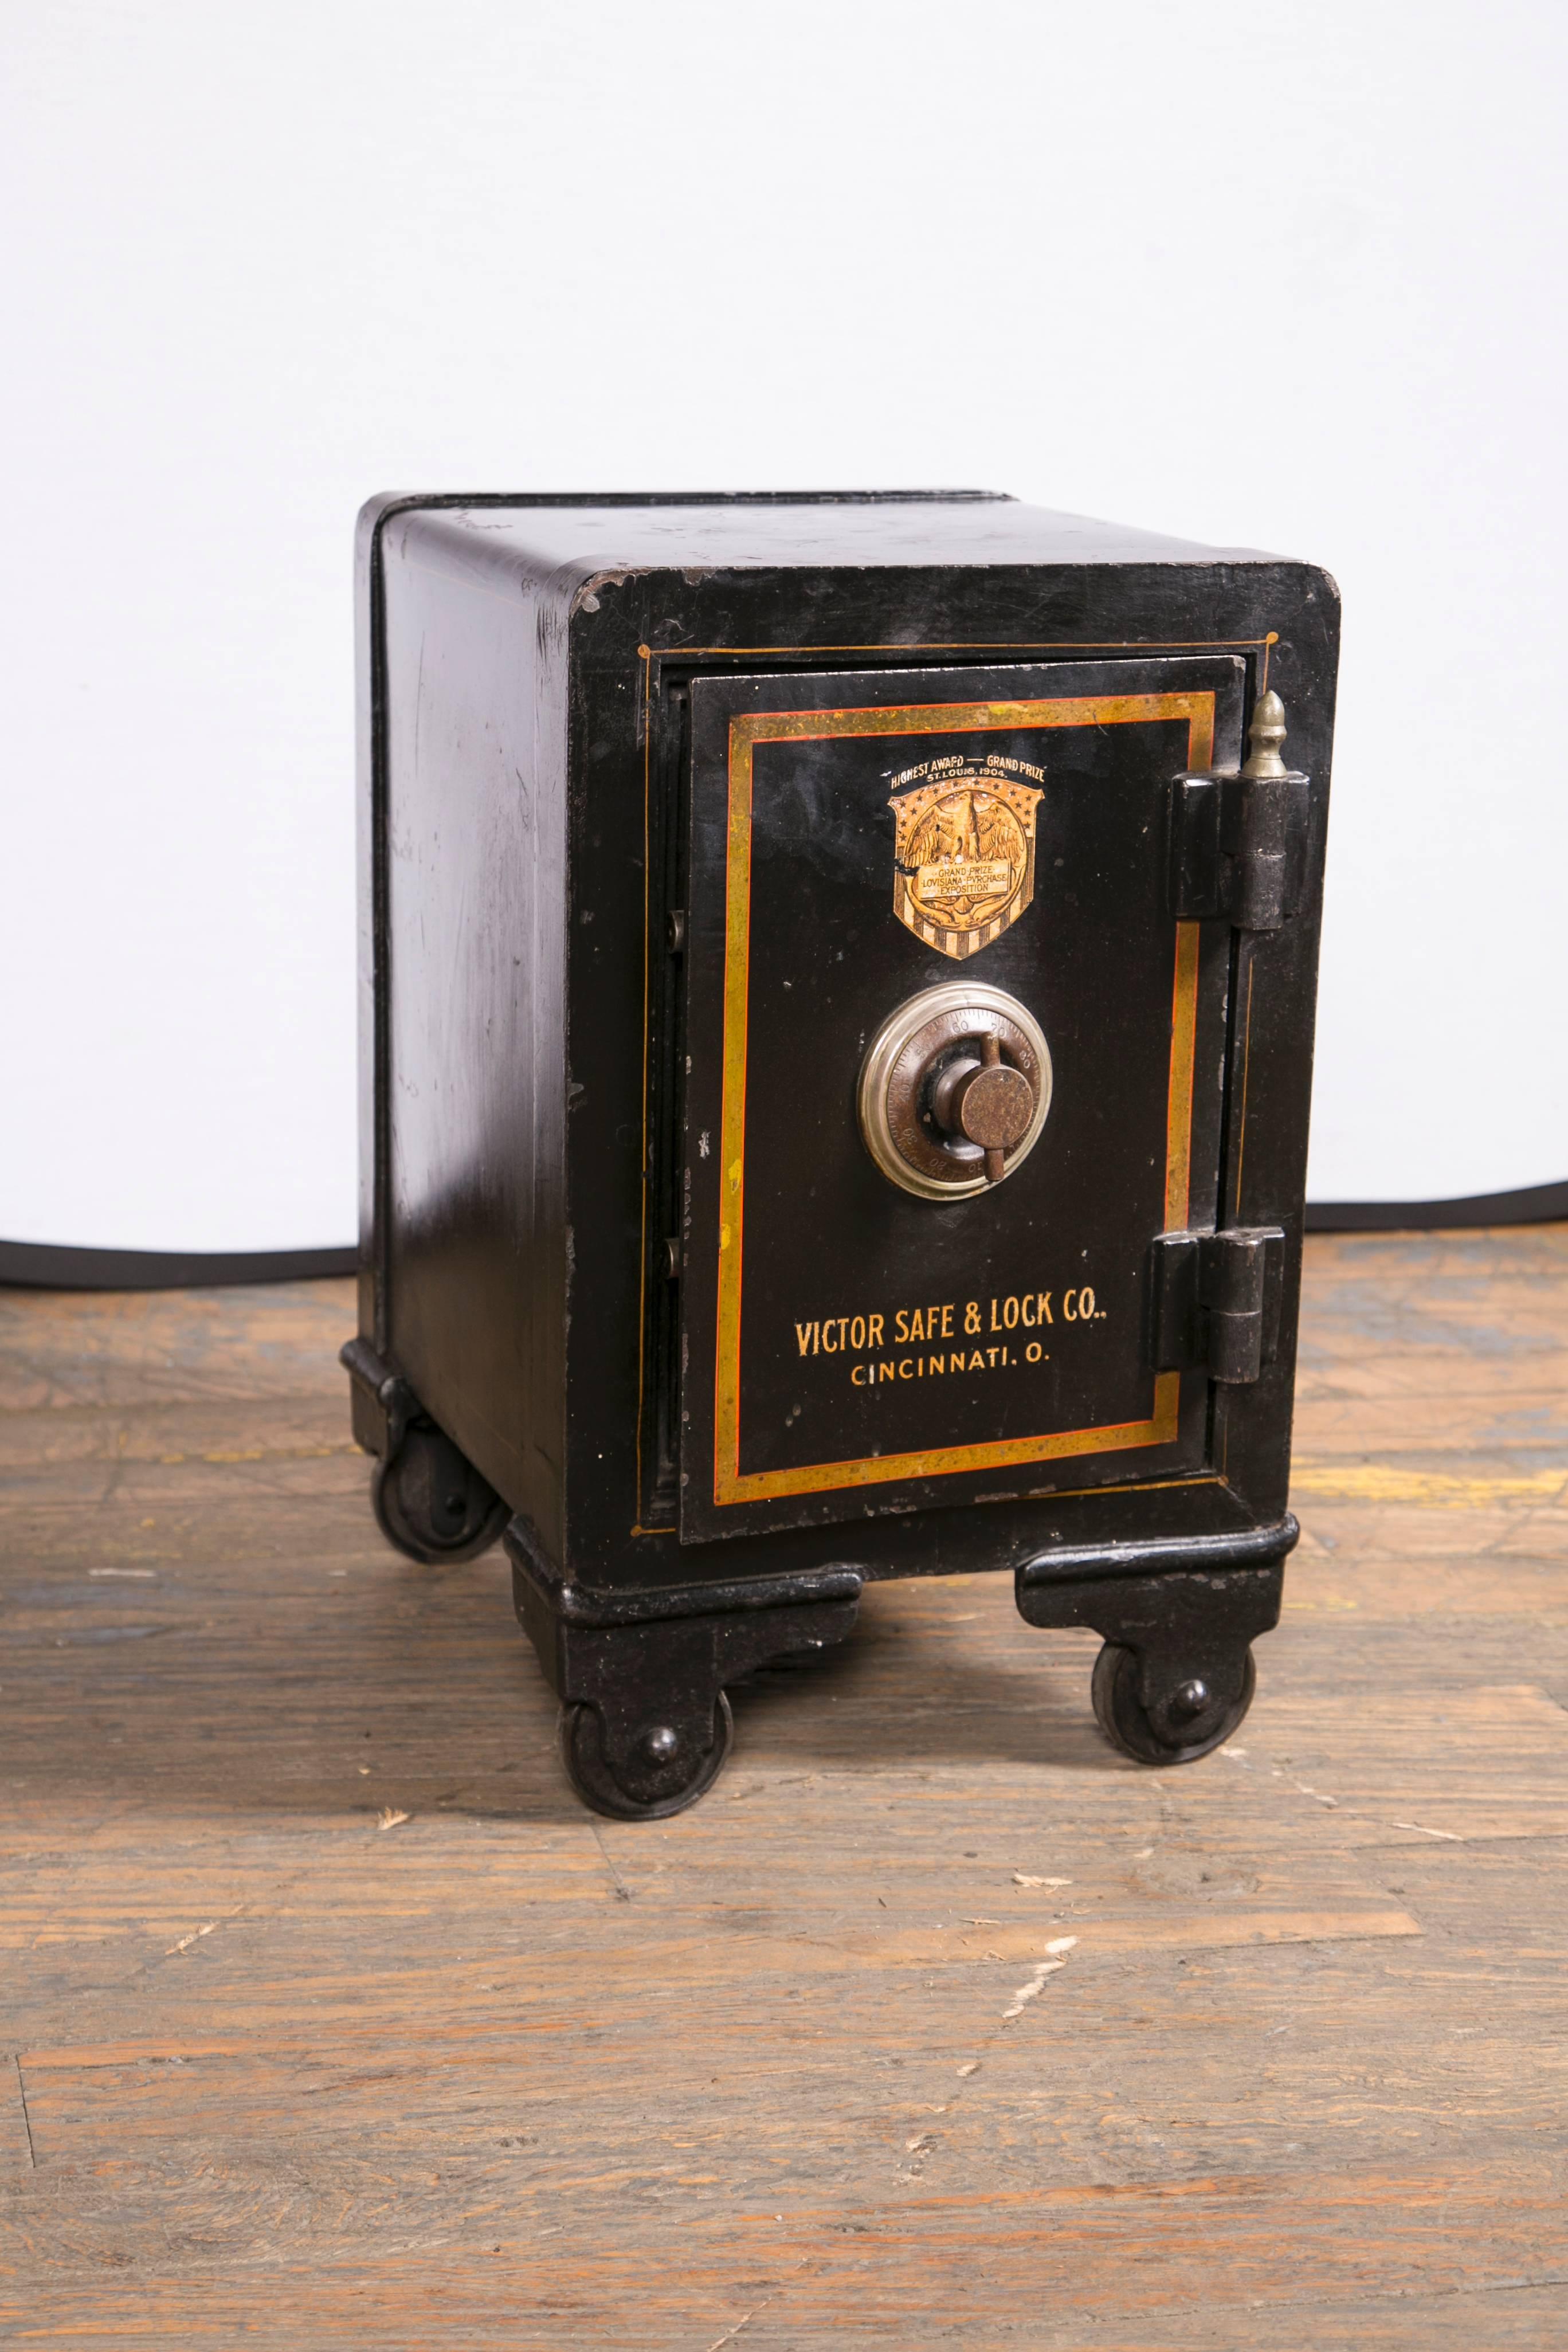 Vintage safe by the Victor Safe & Lock Co., Cincinnati, Ohio